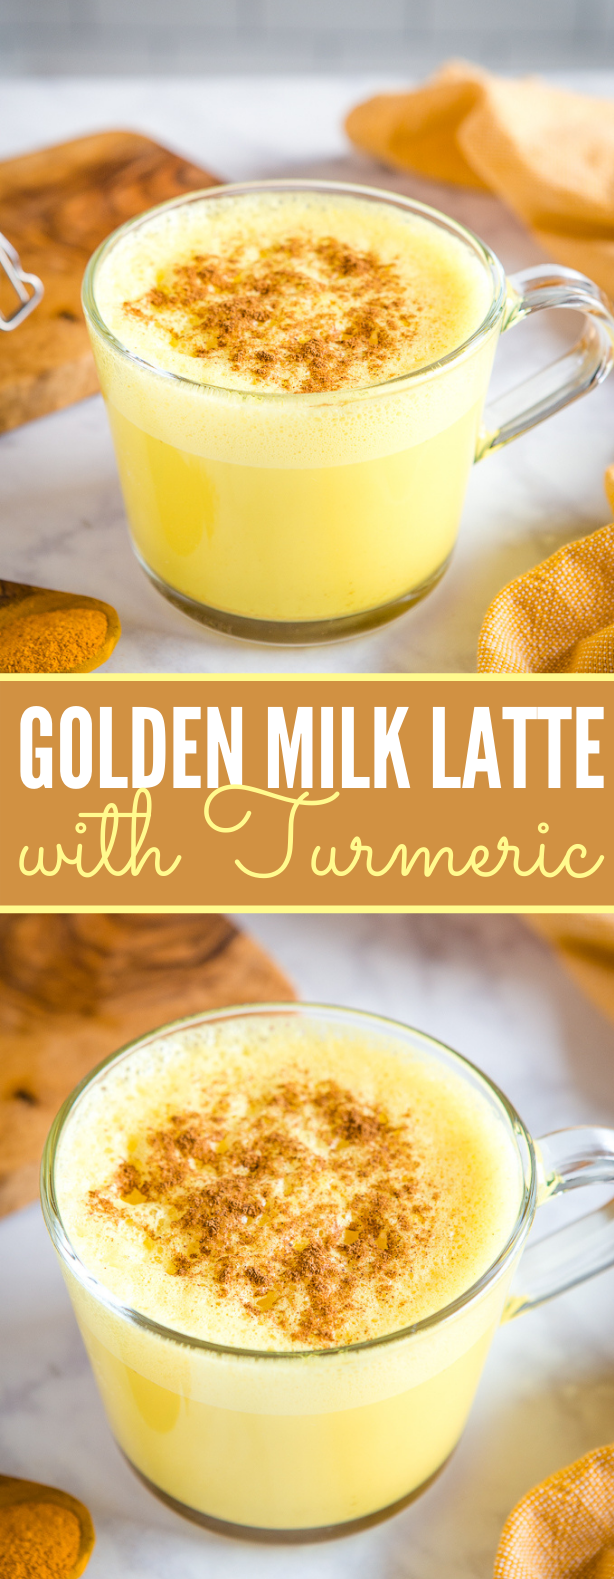 EASY HEALTHY GOLDEN MILK LATTE #drinks #healthydrink #latte #recipes #easyrecipe